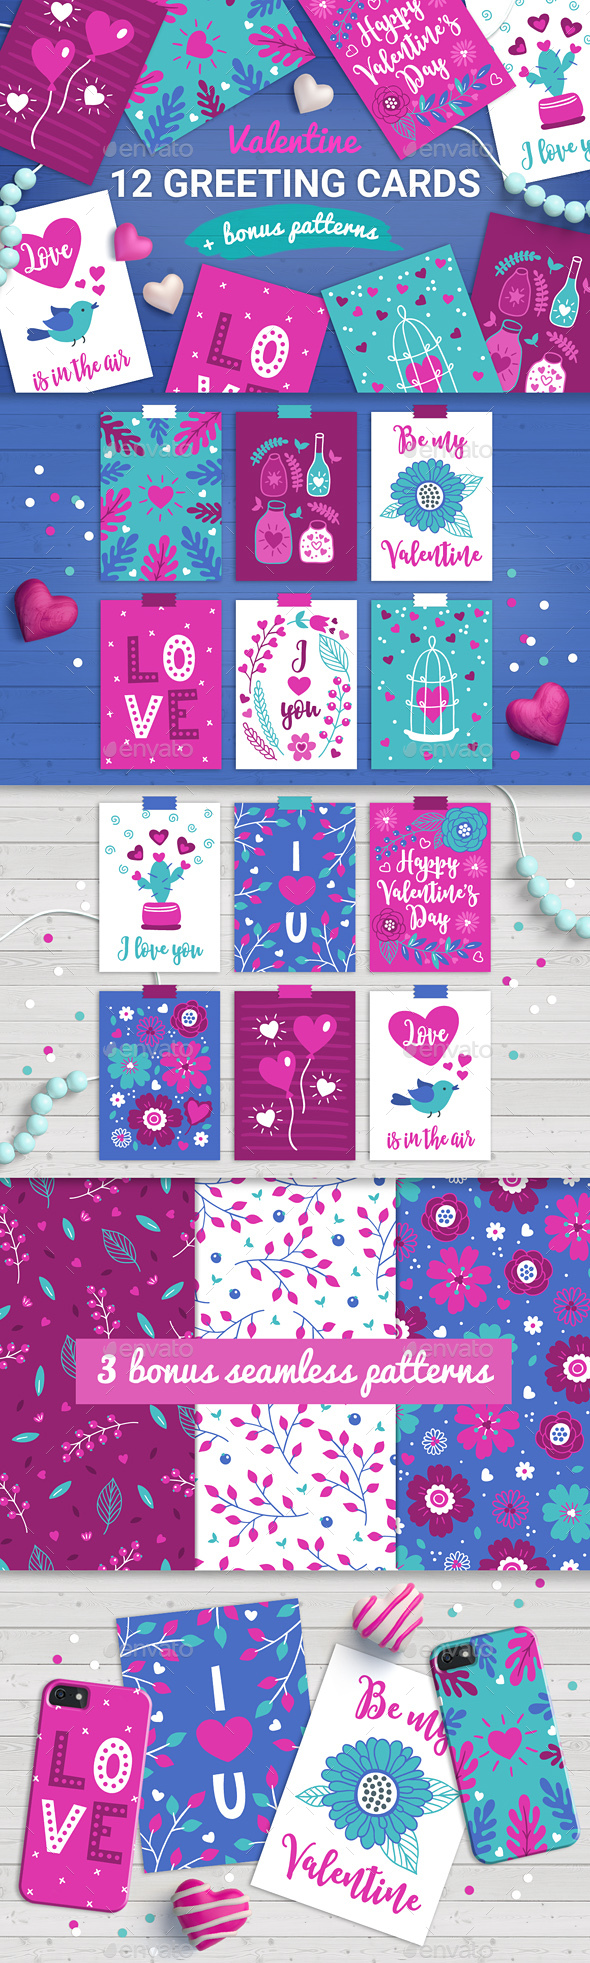 12 Valentine Cards + 3 Seamless Patterns